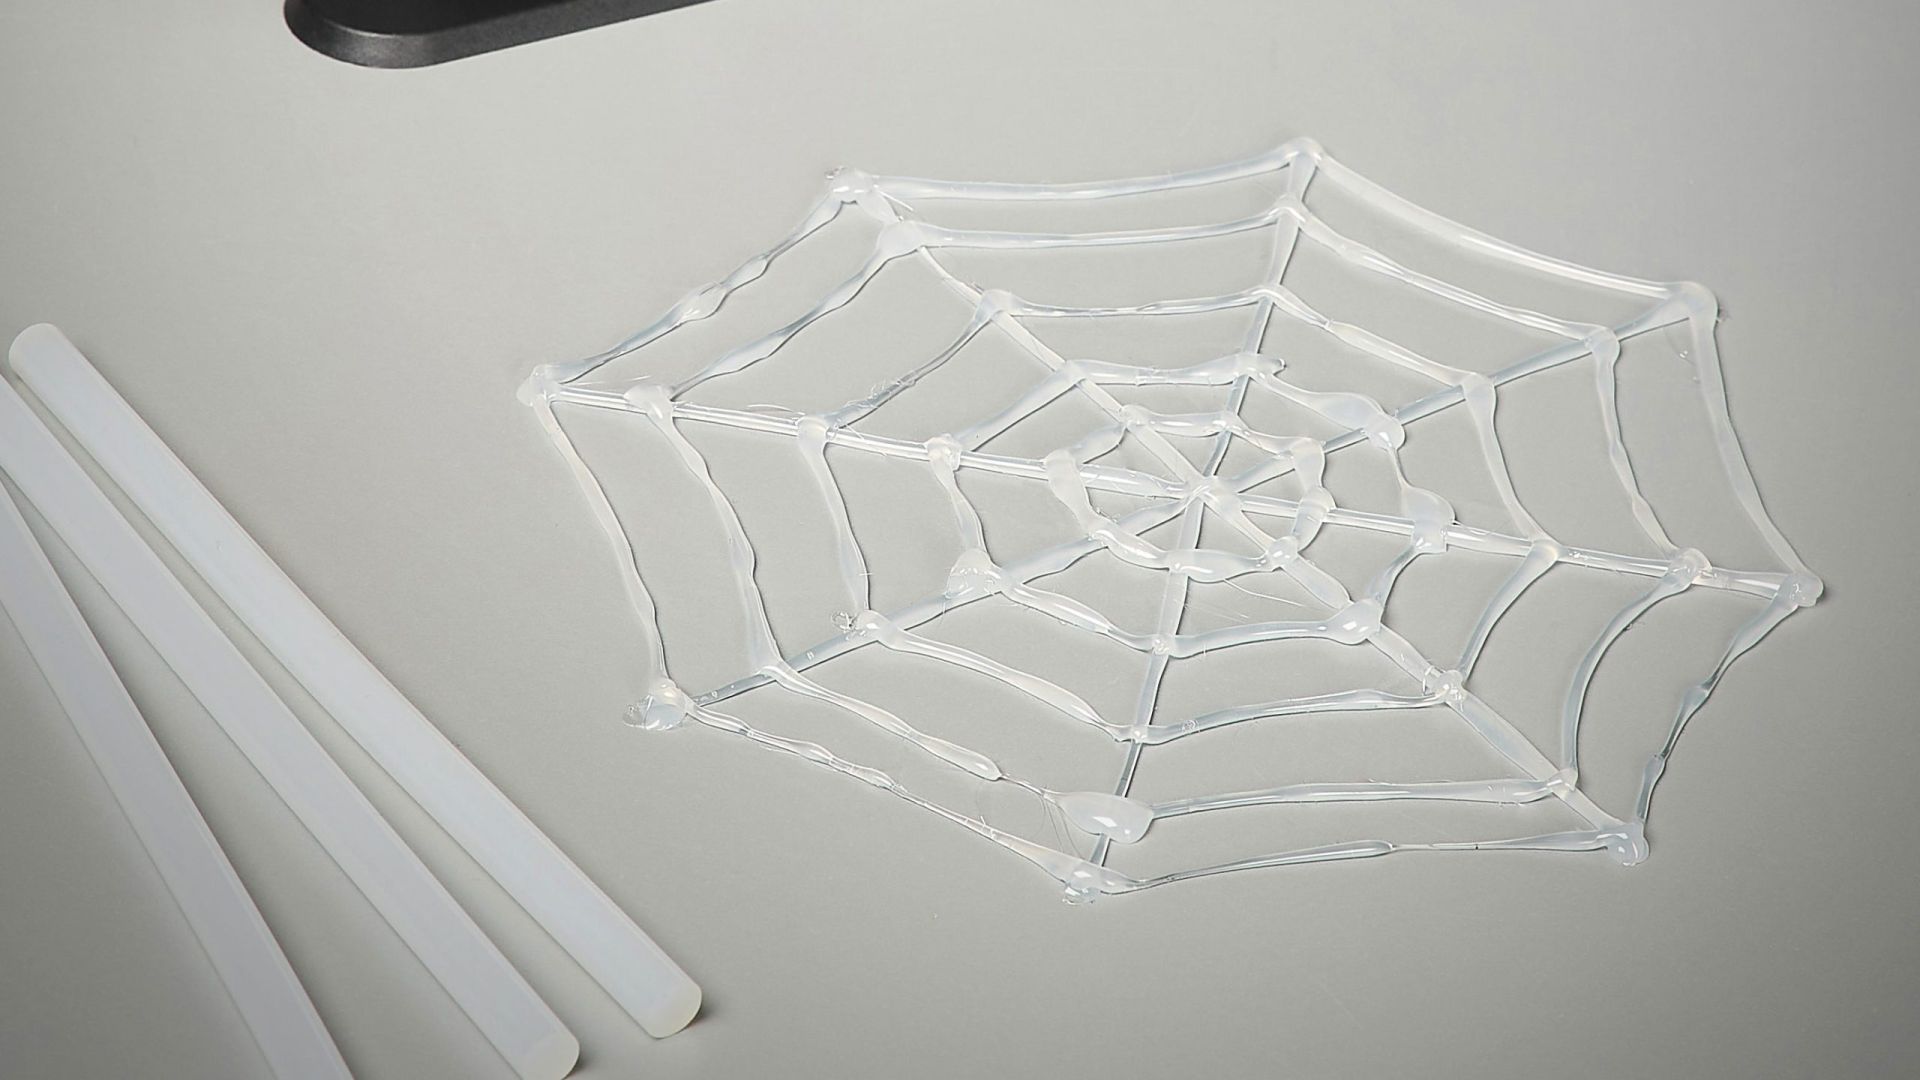 Spooky Halloween spider web